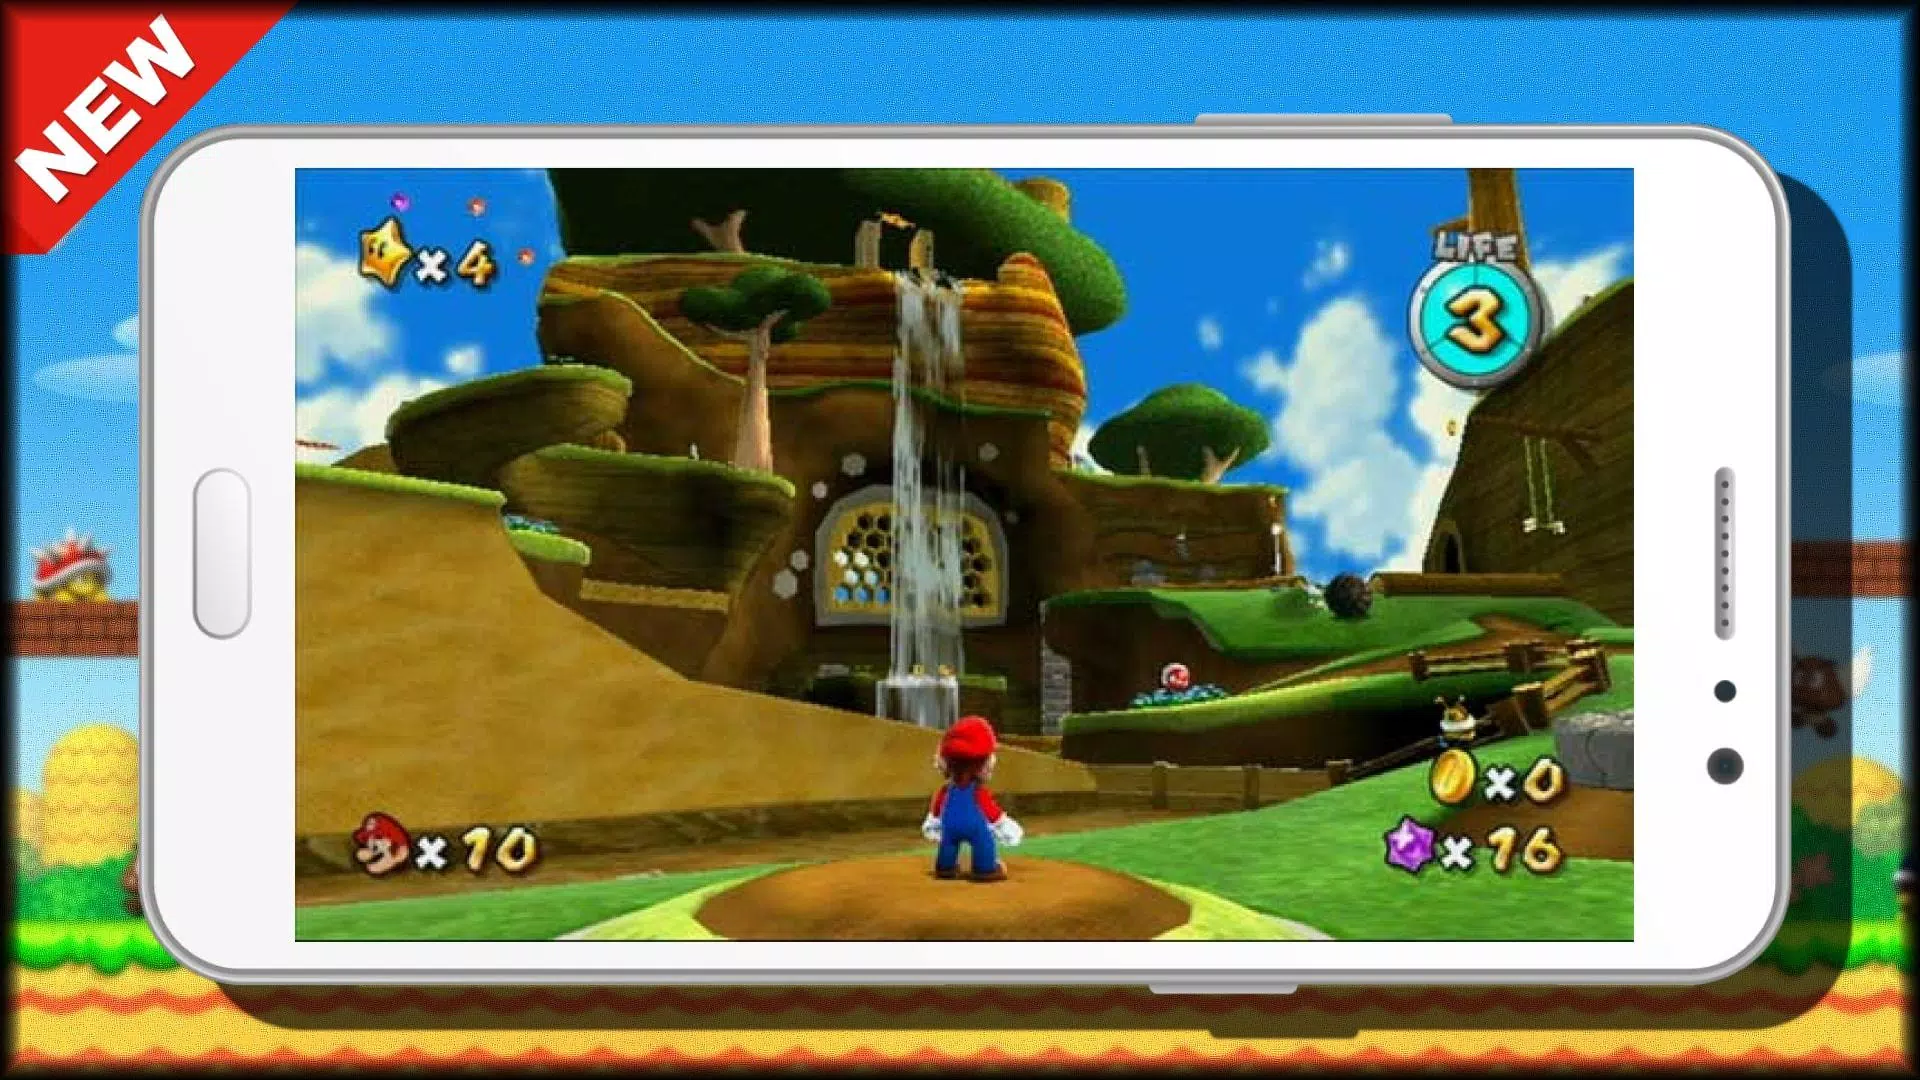 Descarga de APK de guide Super Mario Galaxy 2 para Android